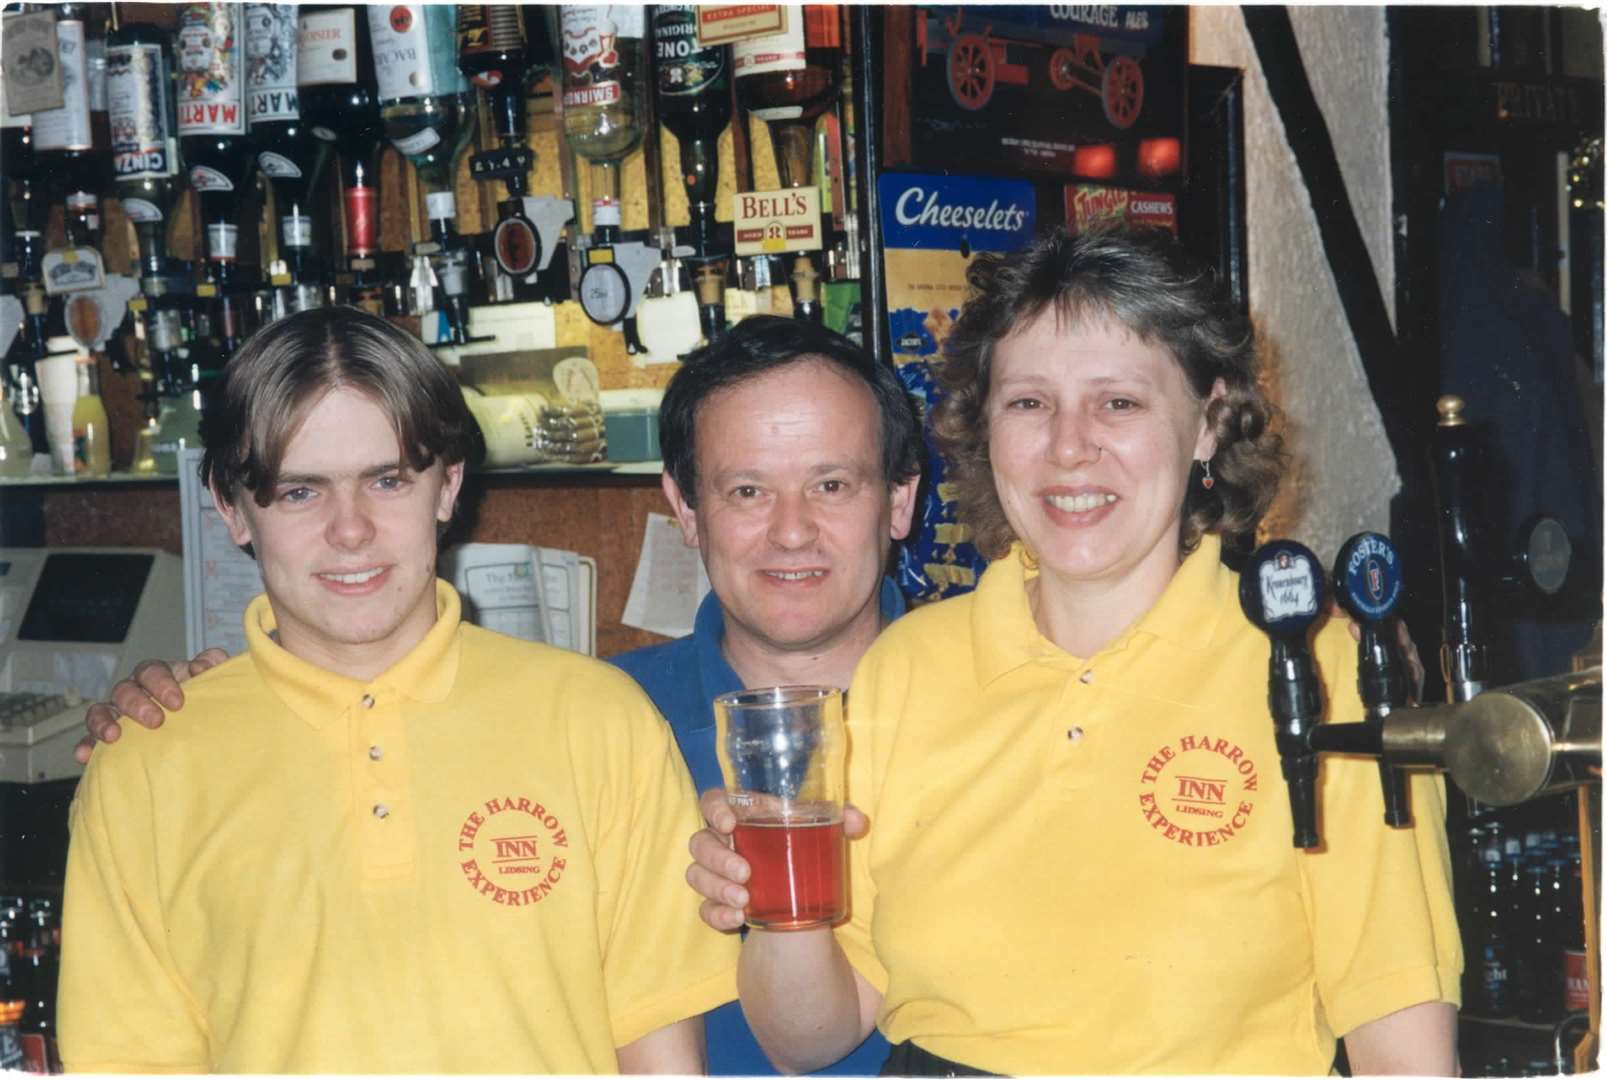 Behind the bar at The Harrow Inn in Lidsing near Gillingham in 1996